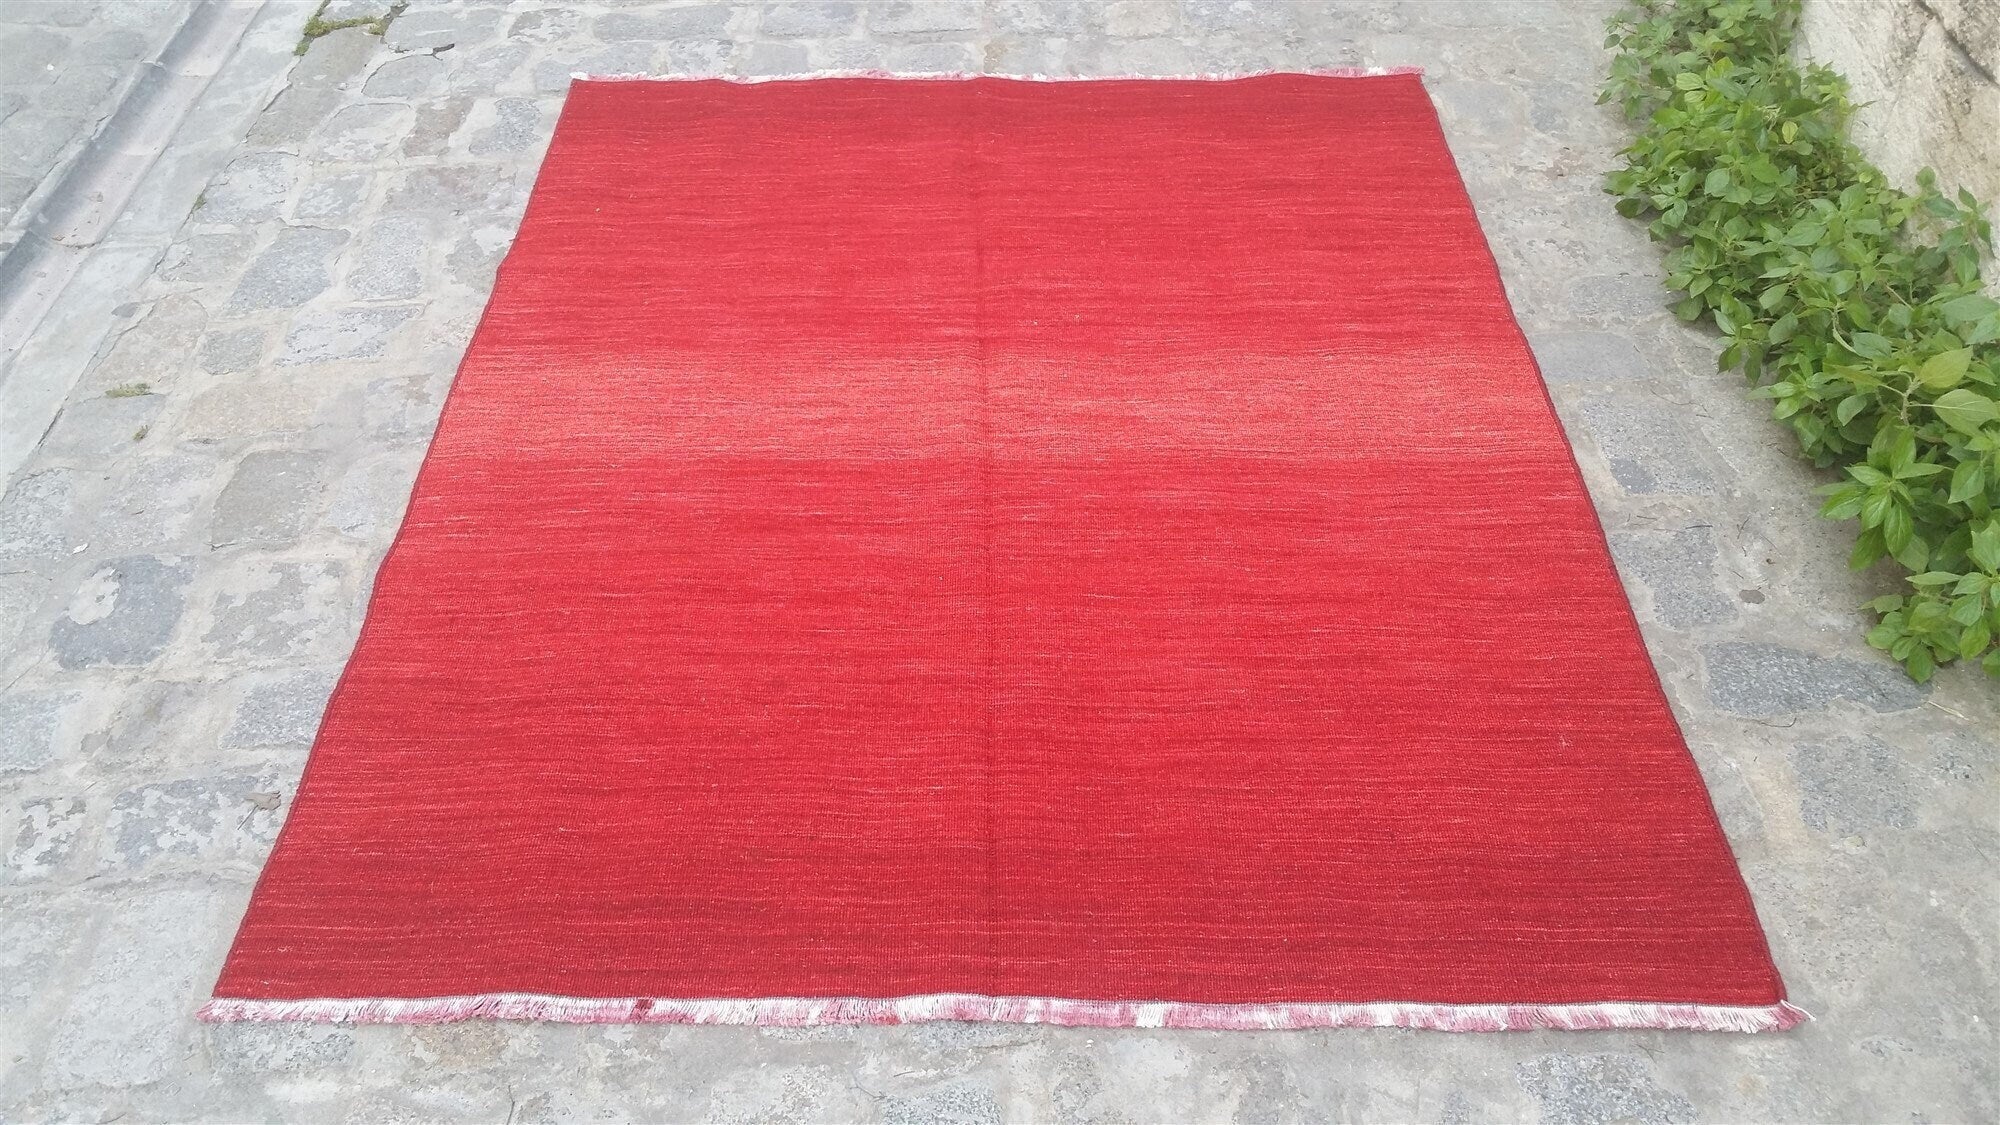 Turkish Kilim Rug 6 x 4 ft Terracotta Red Vintage Handmade Wool Kilim, Antique Persian Boho Rustic Farmhouse Floor Rug